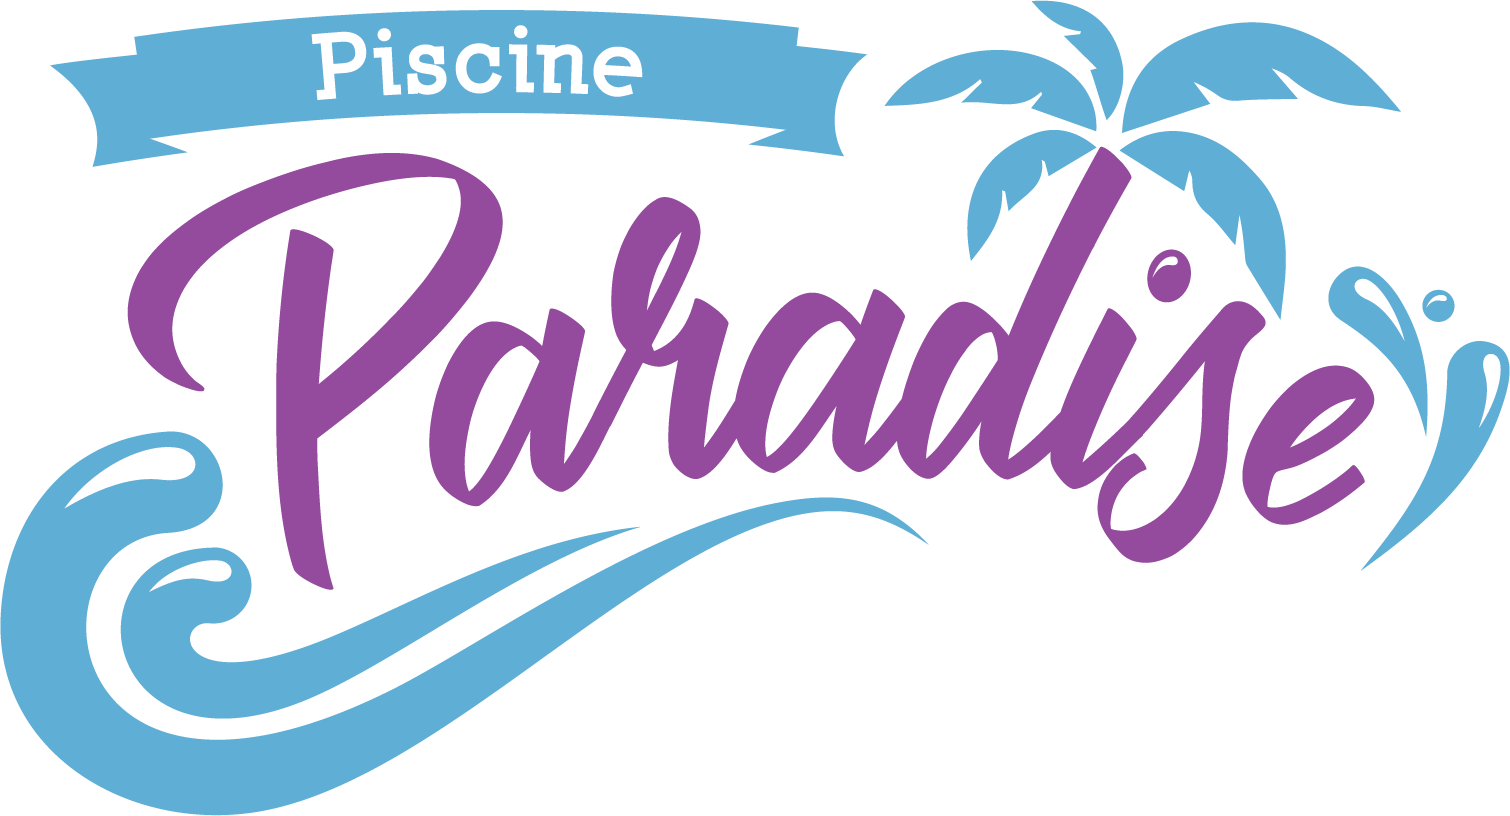 Piscine Paradise